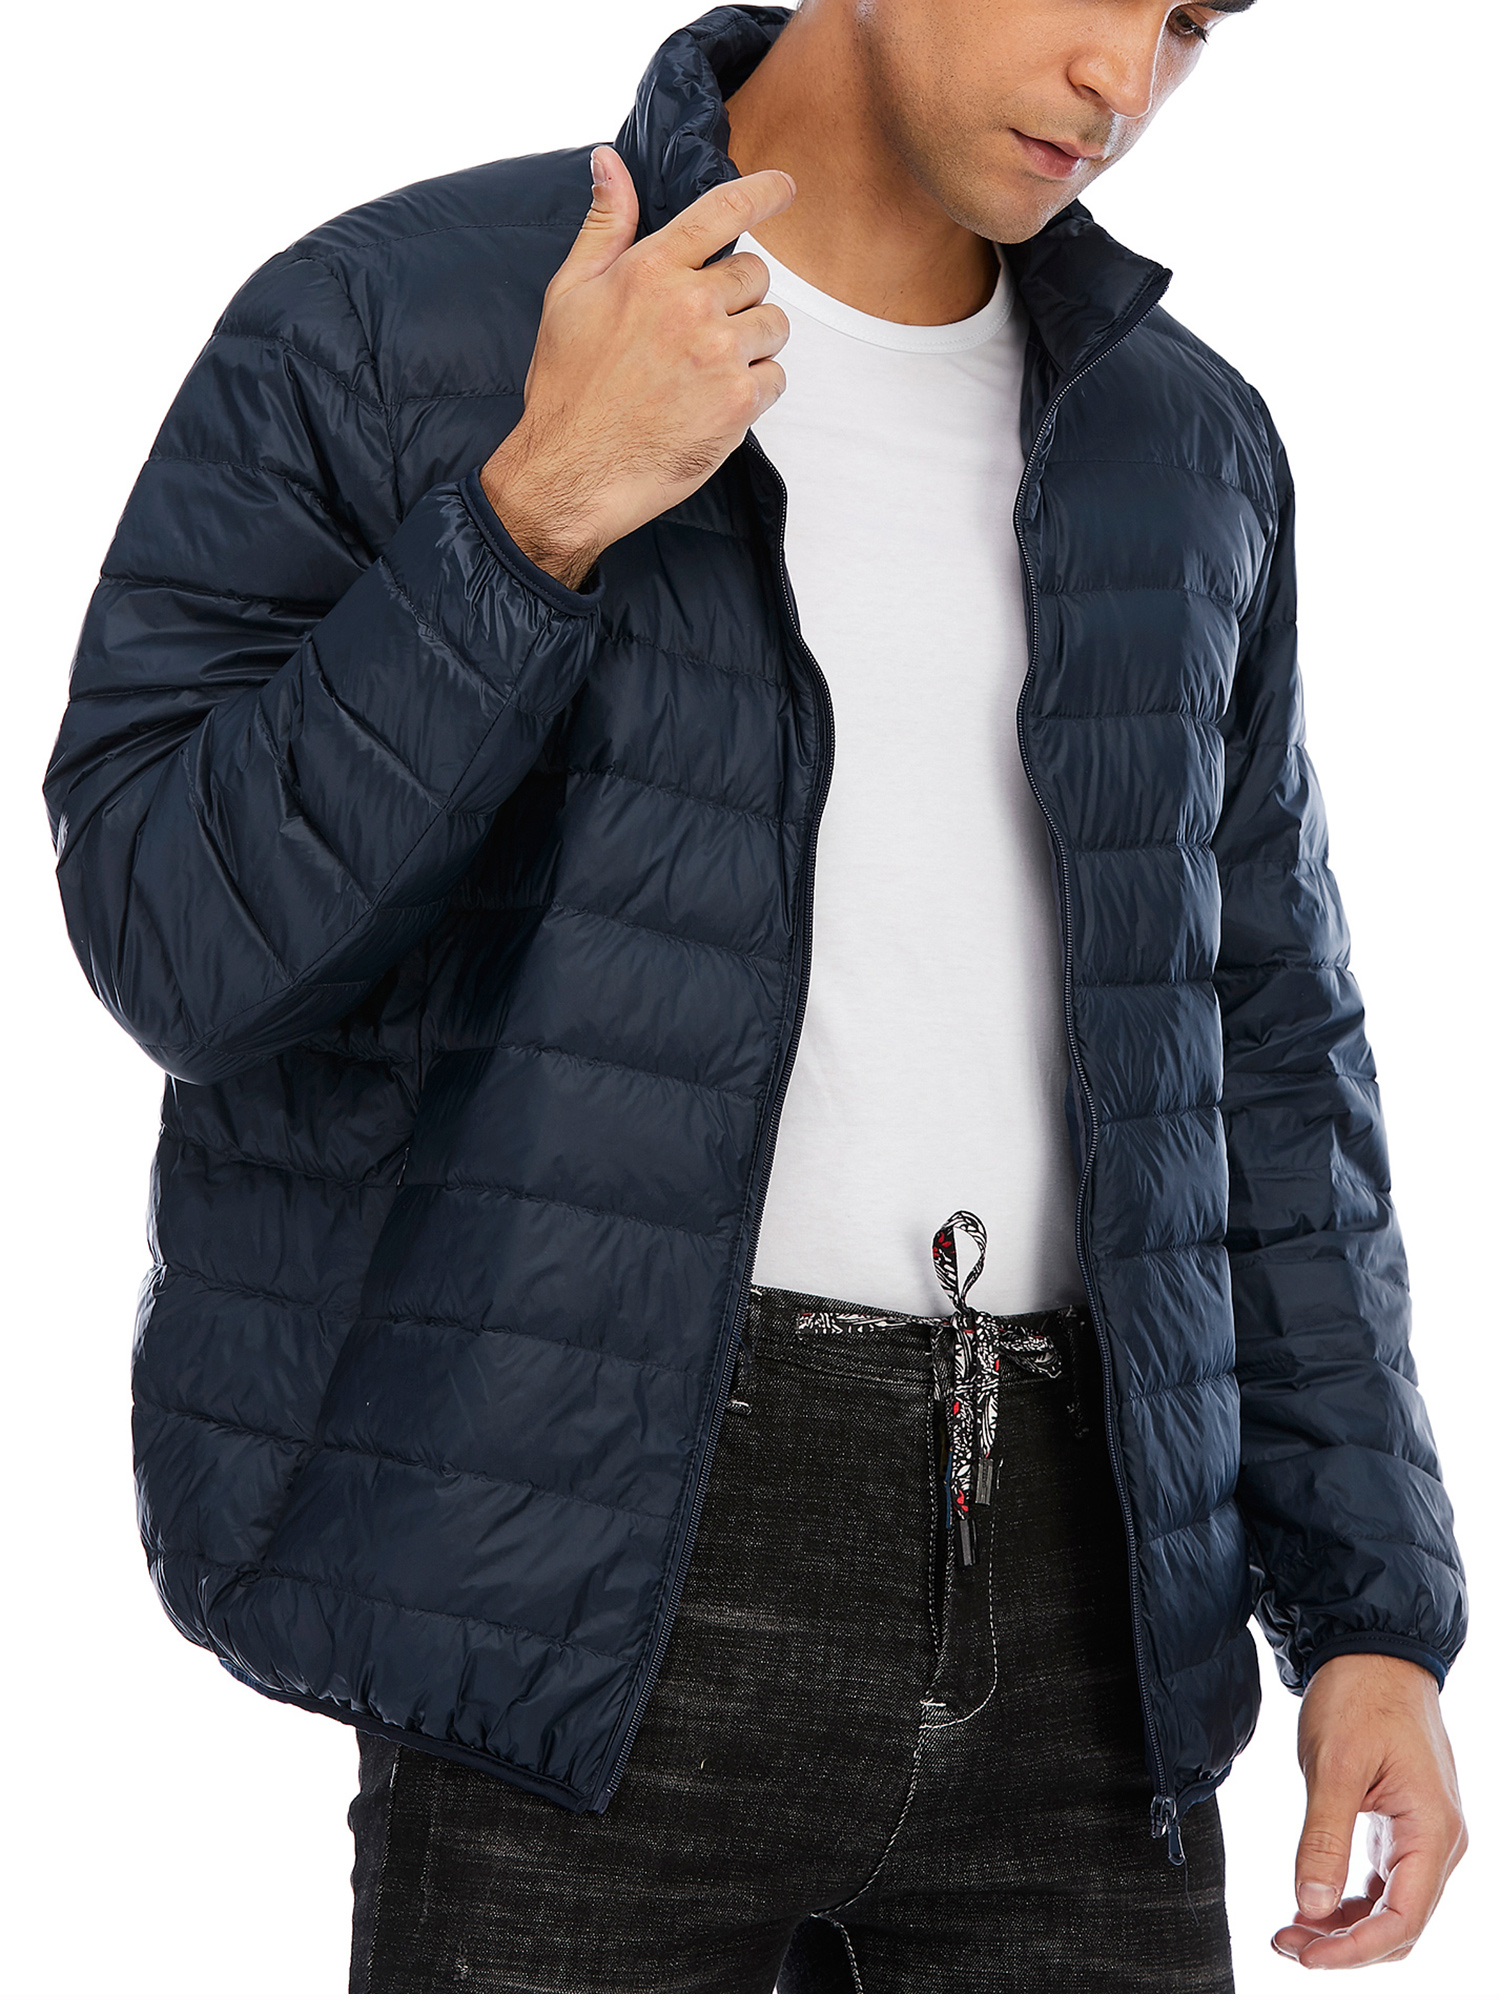 FOCUSSEXY Mens Down Jacket Mens Outwear Puffer Coats Zip Up Windbreaker Lightweight Winter Jackets Packable Warm Coat Stretch Winter Coat - image 1 of 7